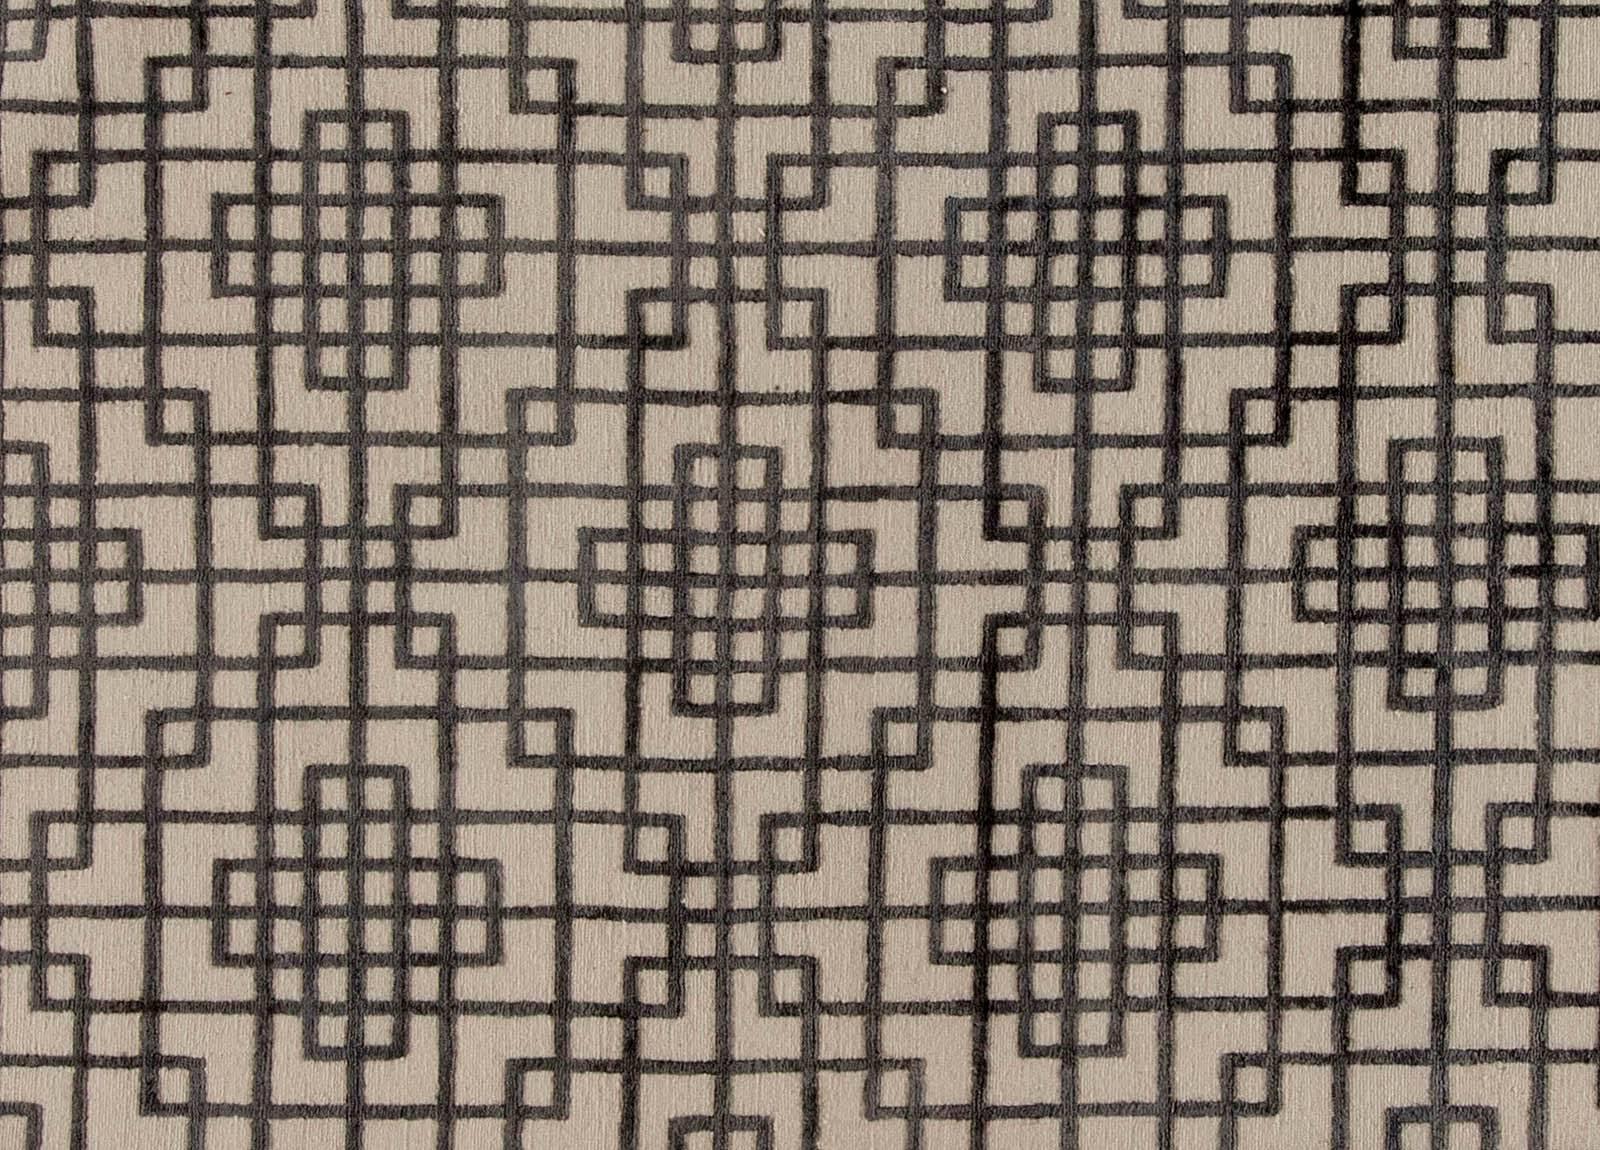 Contemporary Tibetan Art Deco Style silver rug by Doris Leslie Blau.
Size: 12.1